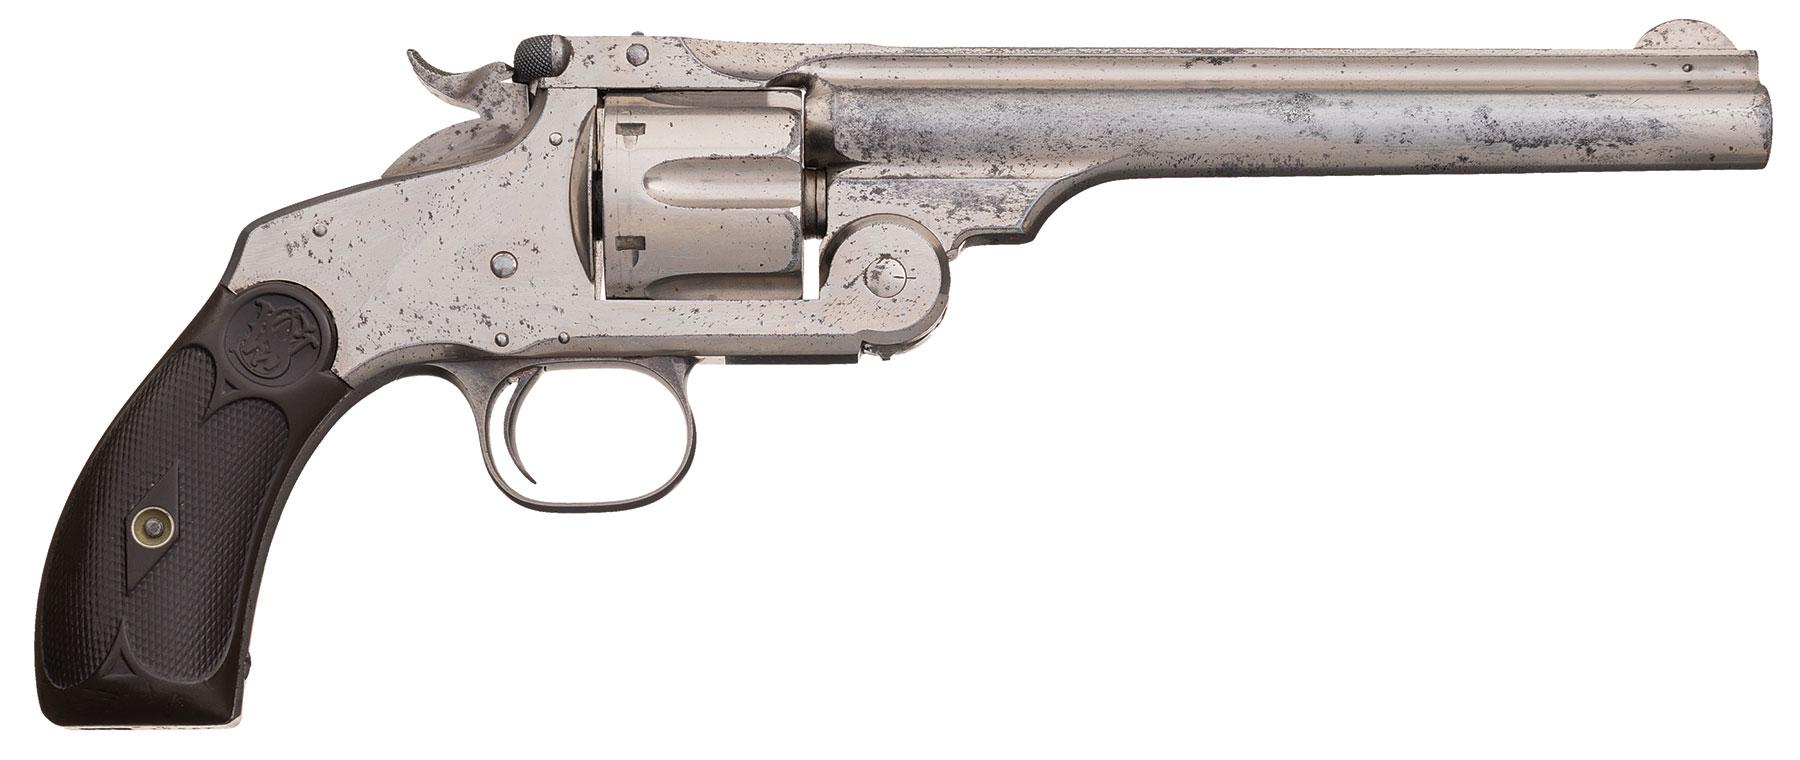 Smith & Wesson No. 3 South Australia Police revolver carbine detachable stock